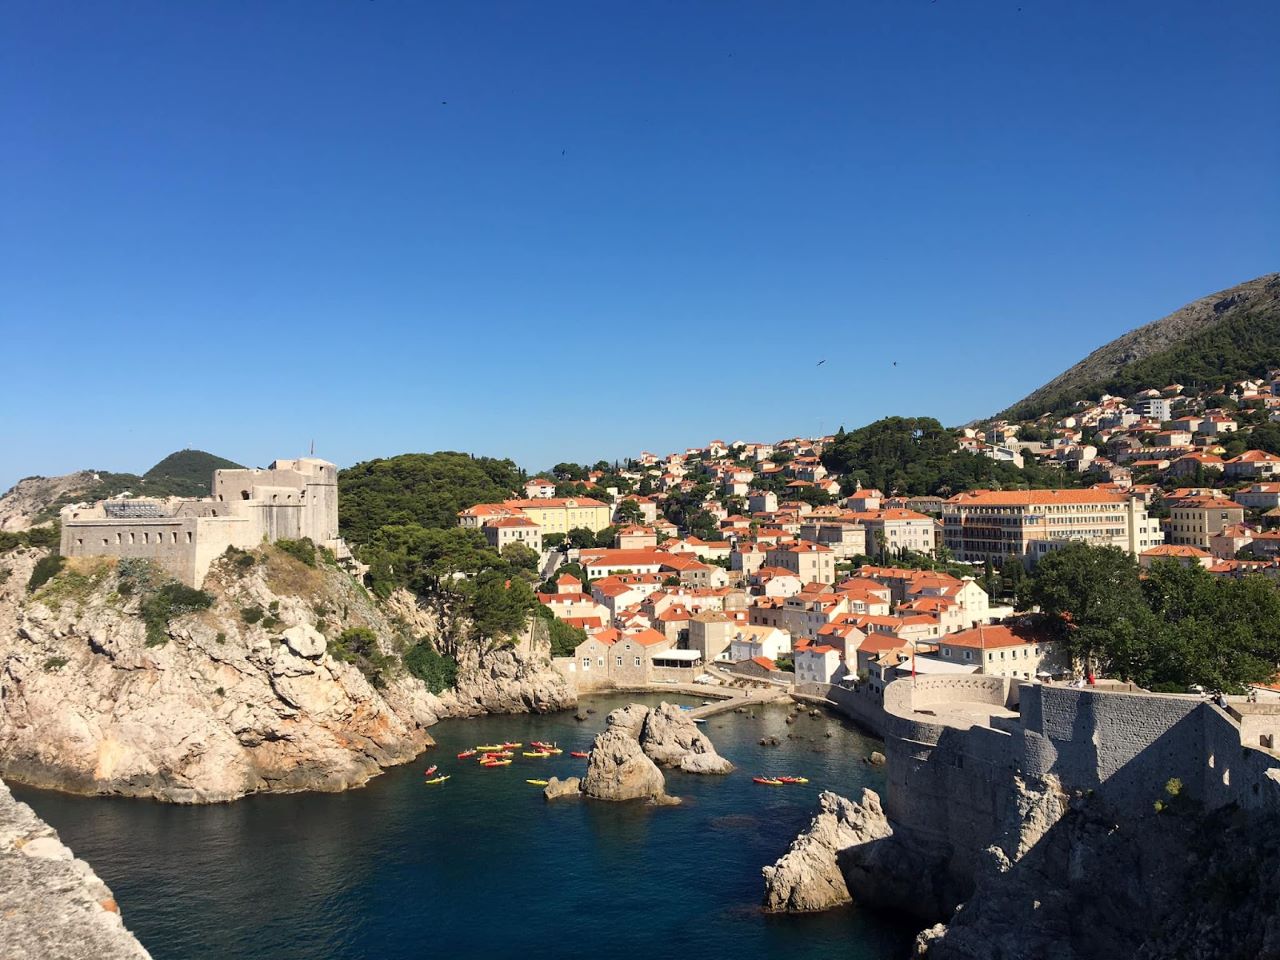 Views of Dubrovnik